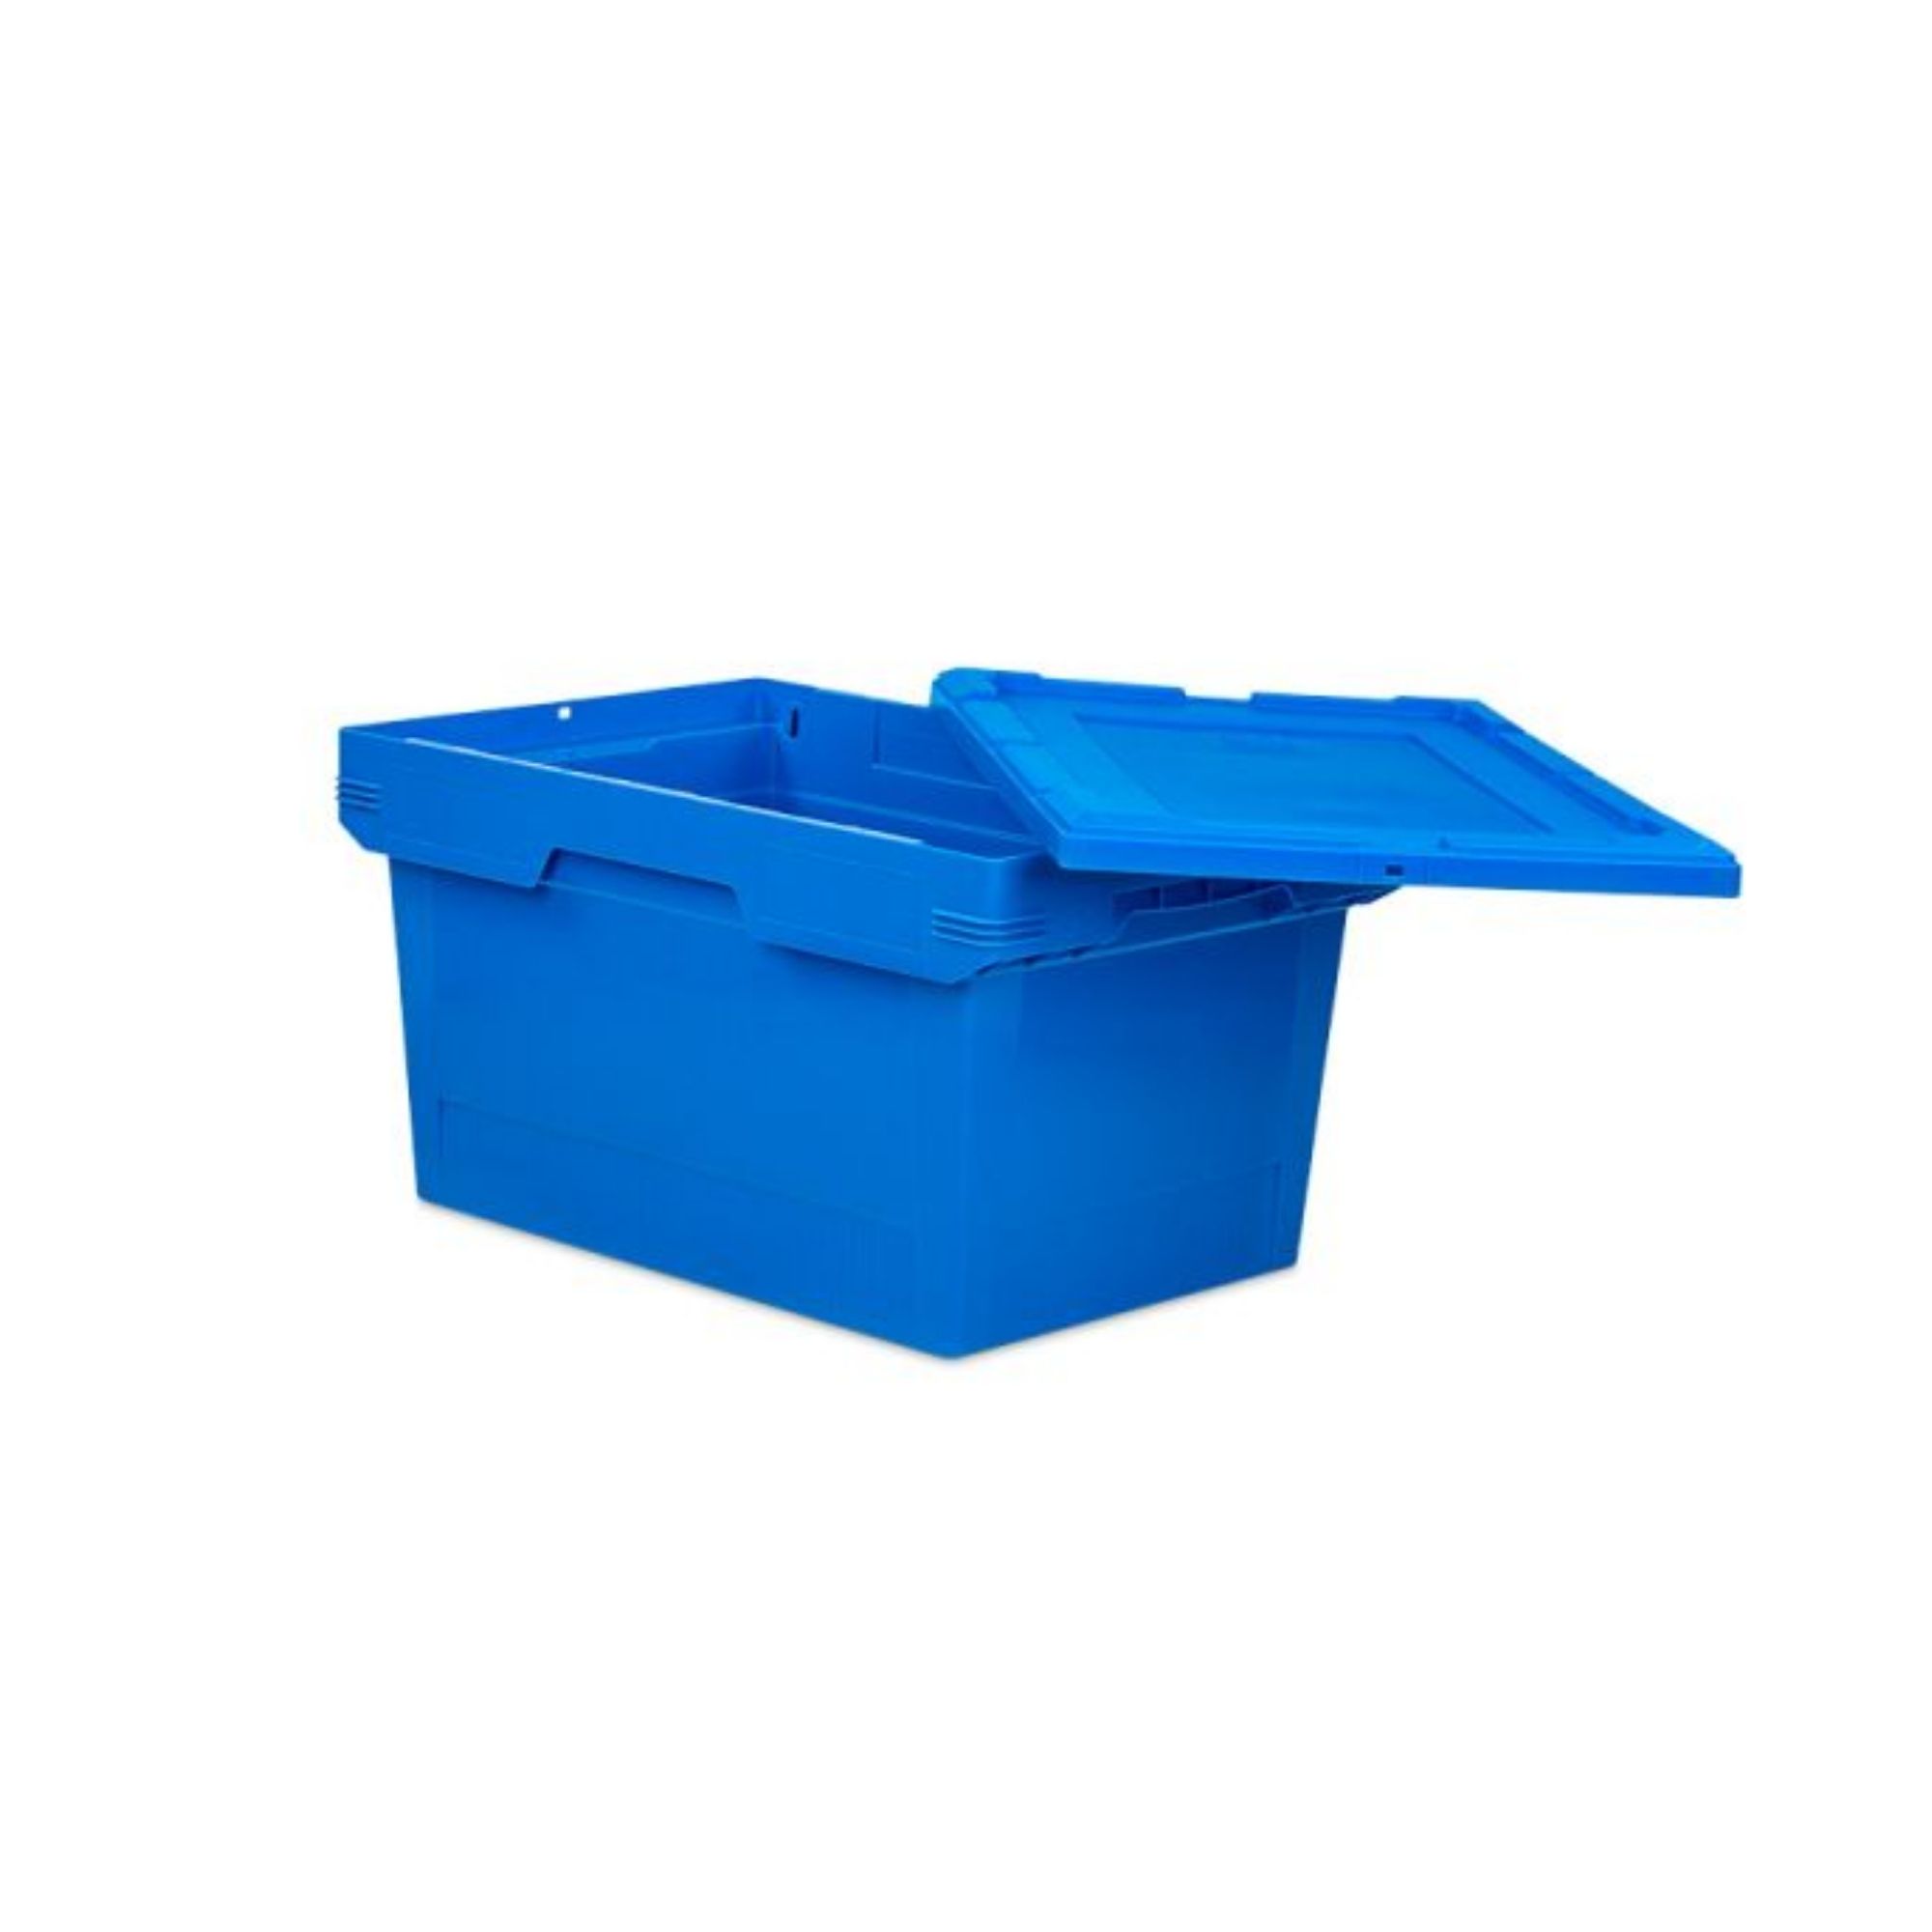 Conical Mehrweg-Stapelbehälter Blau | HxBxT 32,3x40x60cm | 58 Liter | Lagerbox Eurobox Transportbox Transportbehälter Stapelbehälter